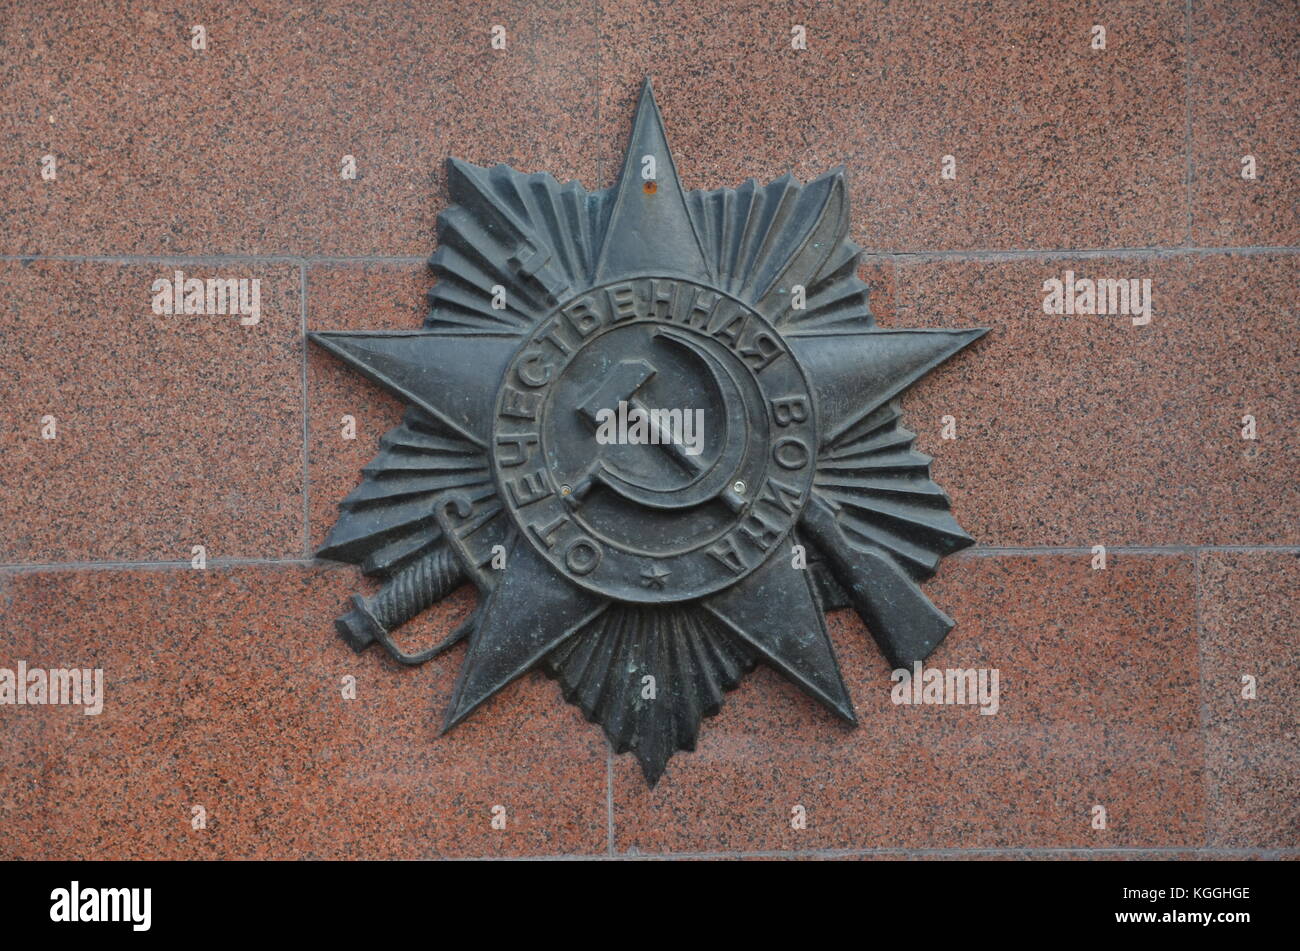 Soviet union symbol, communism, Оте́чественная война́, star, gun, sword, hammer and sickle. picture taken in Kazakhstan. Great patriotic war. Stock Photo